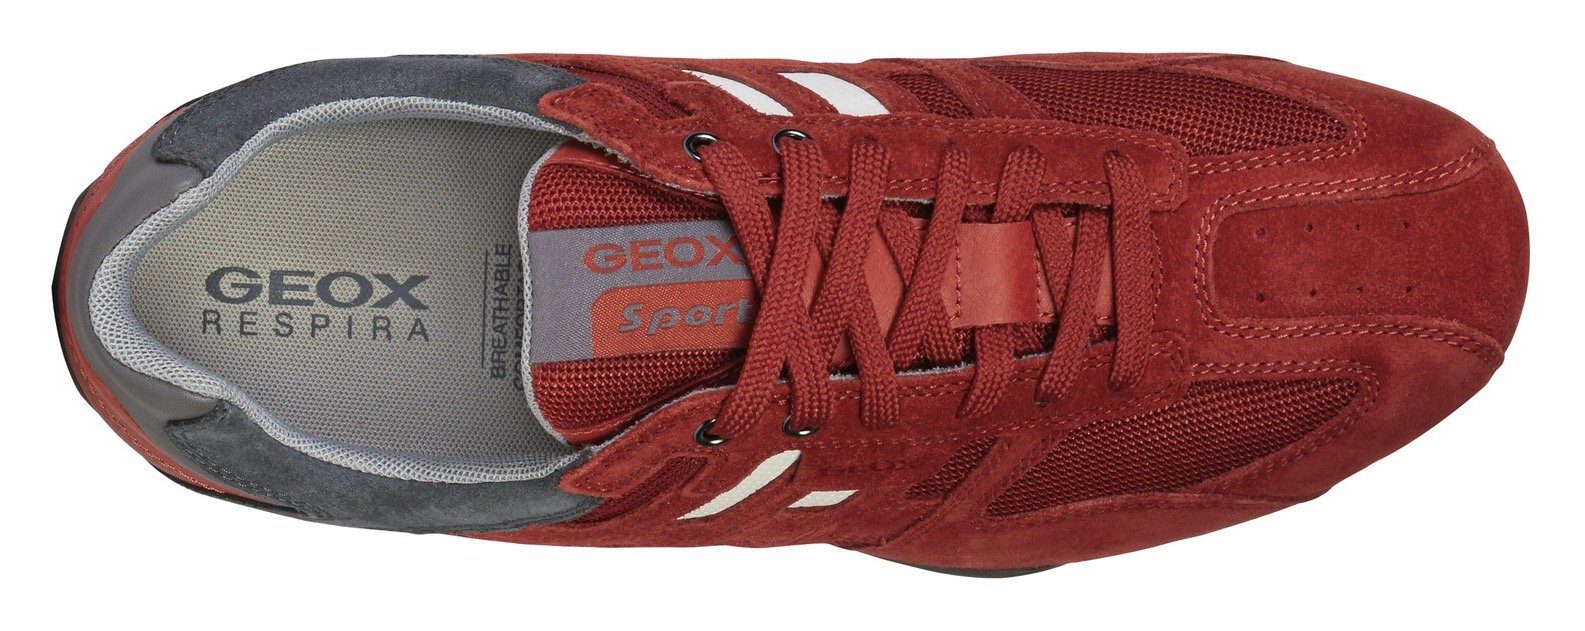 Spezial im Geox mit rot-grau Geox Snake Membrane Materialmix Sneaker